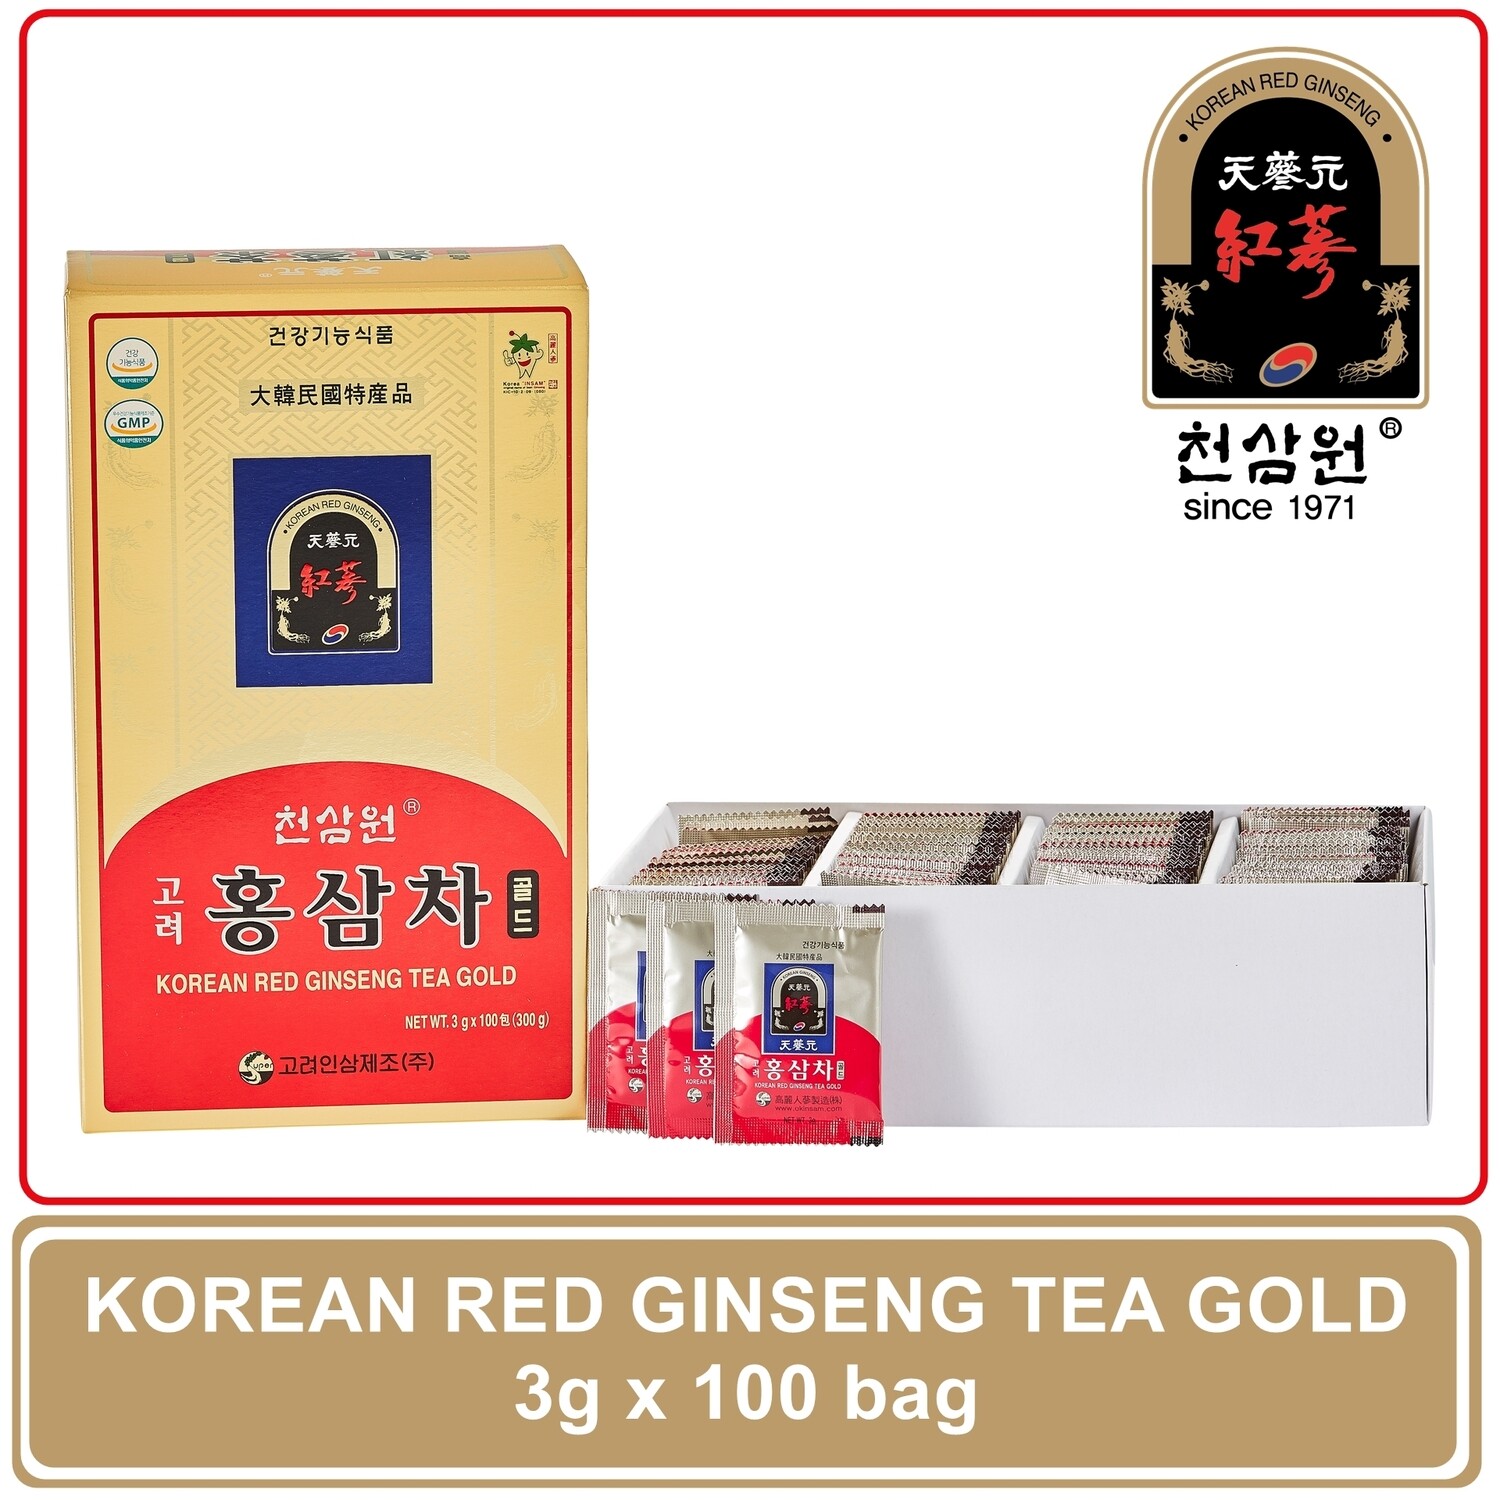 Korean Red Ginseng Tea Gold 3g x 100 bag